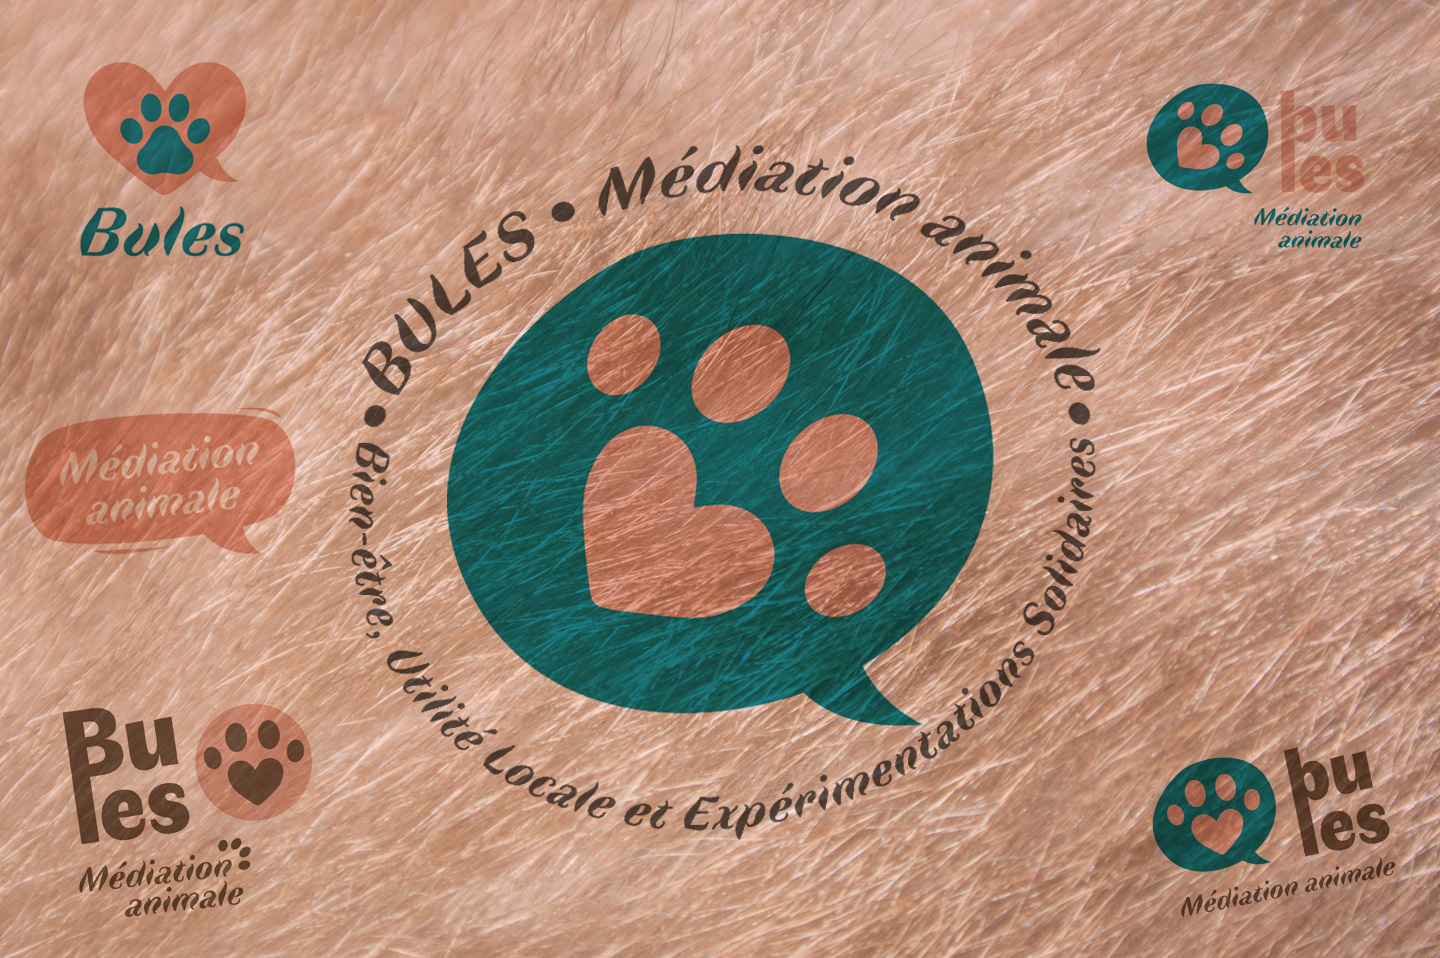 logos bules mediationanimale